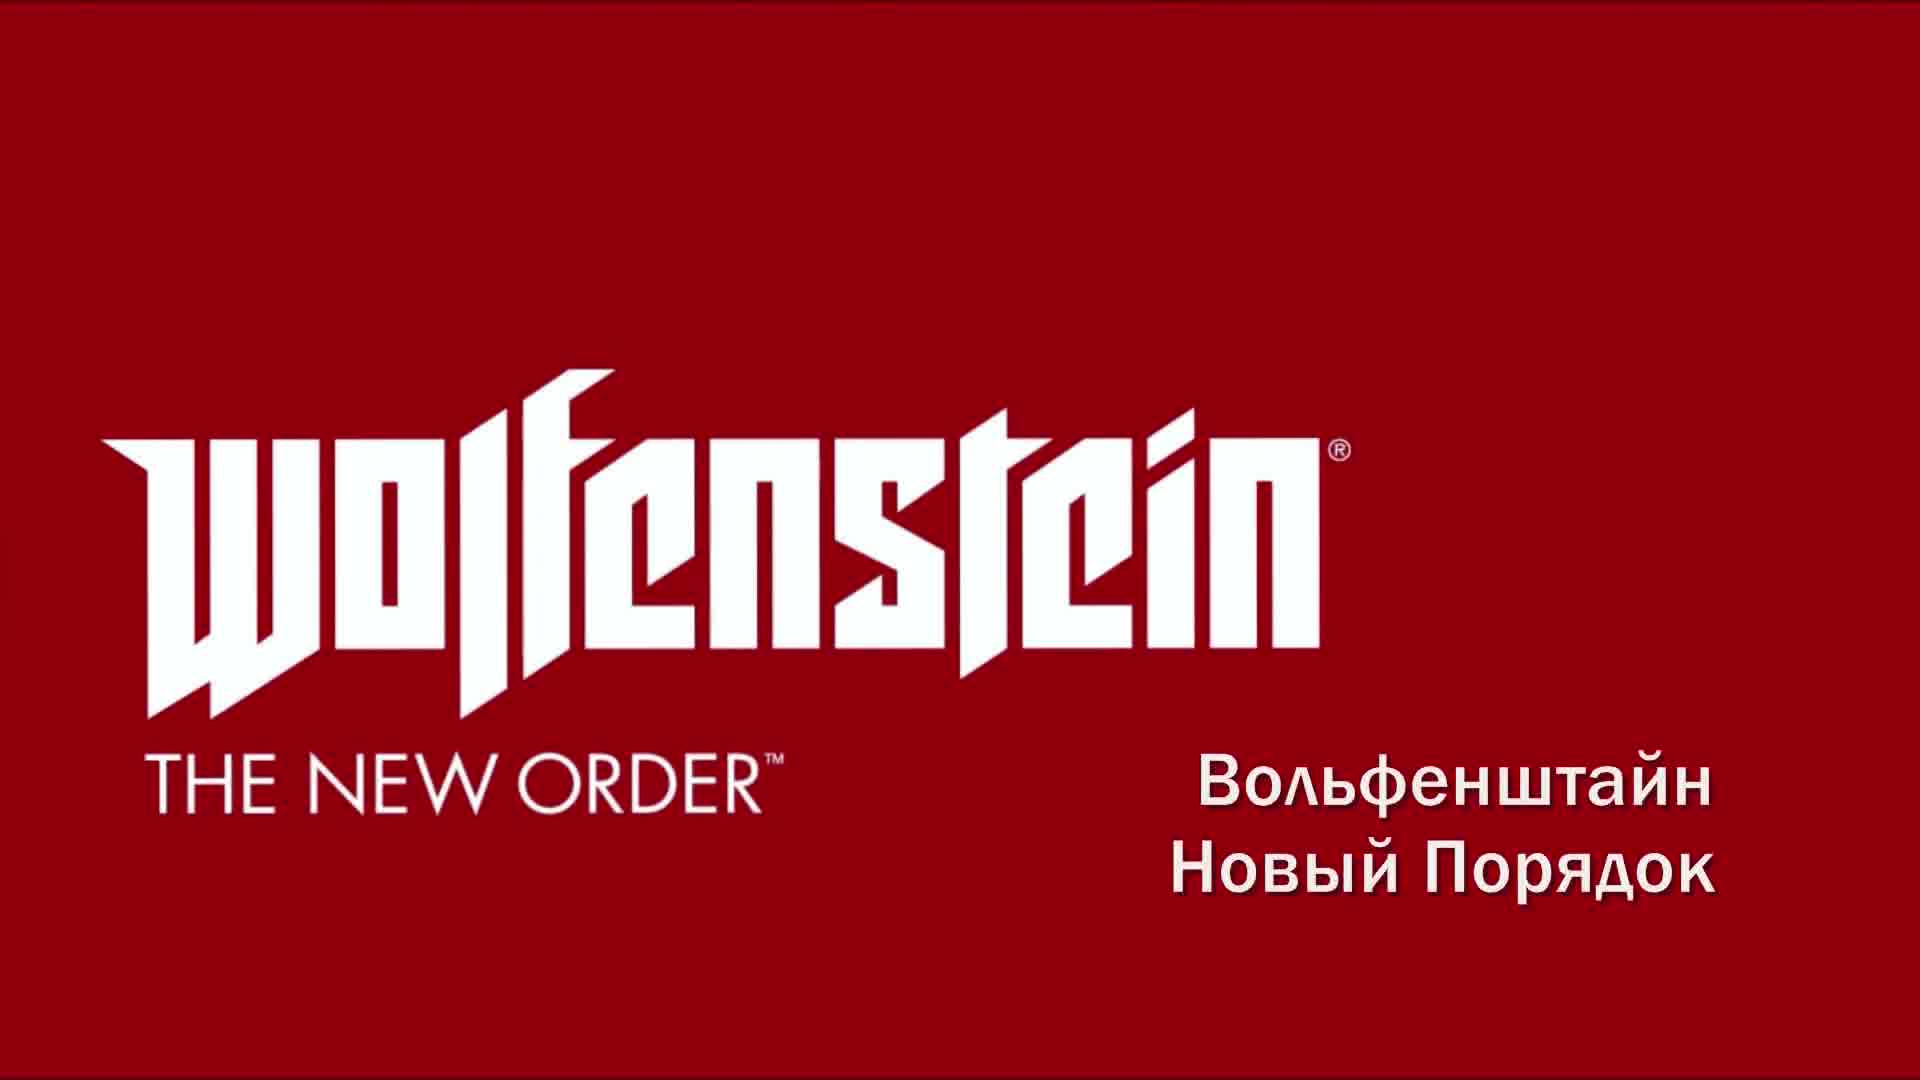 WOLFENSTEIN - The New Order - Полнометражный фильм